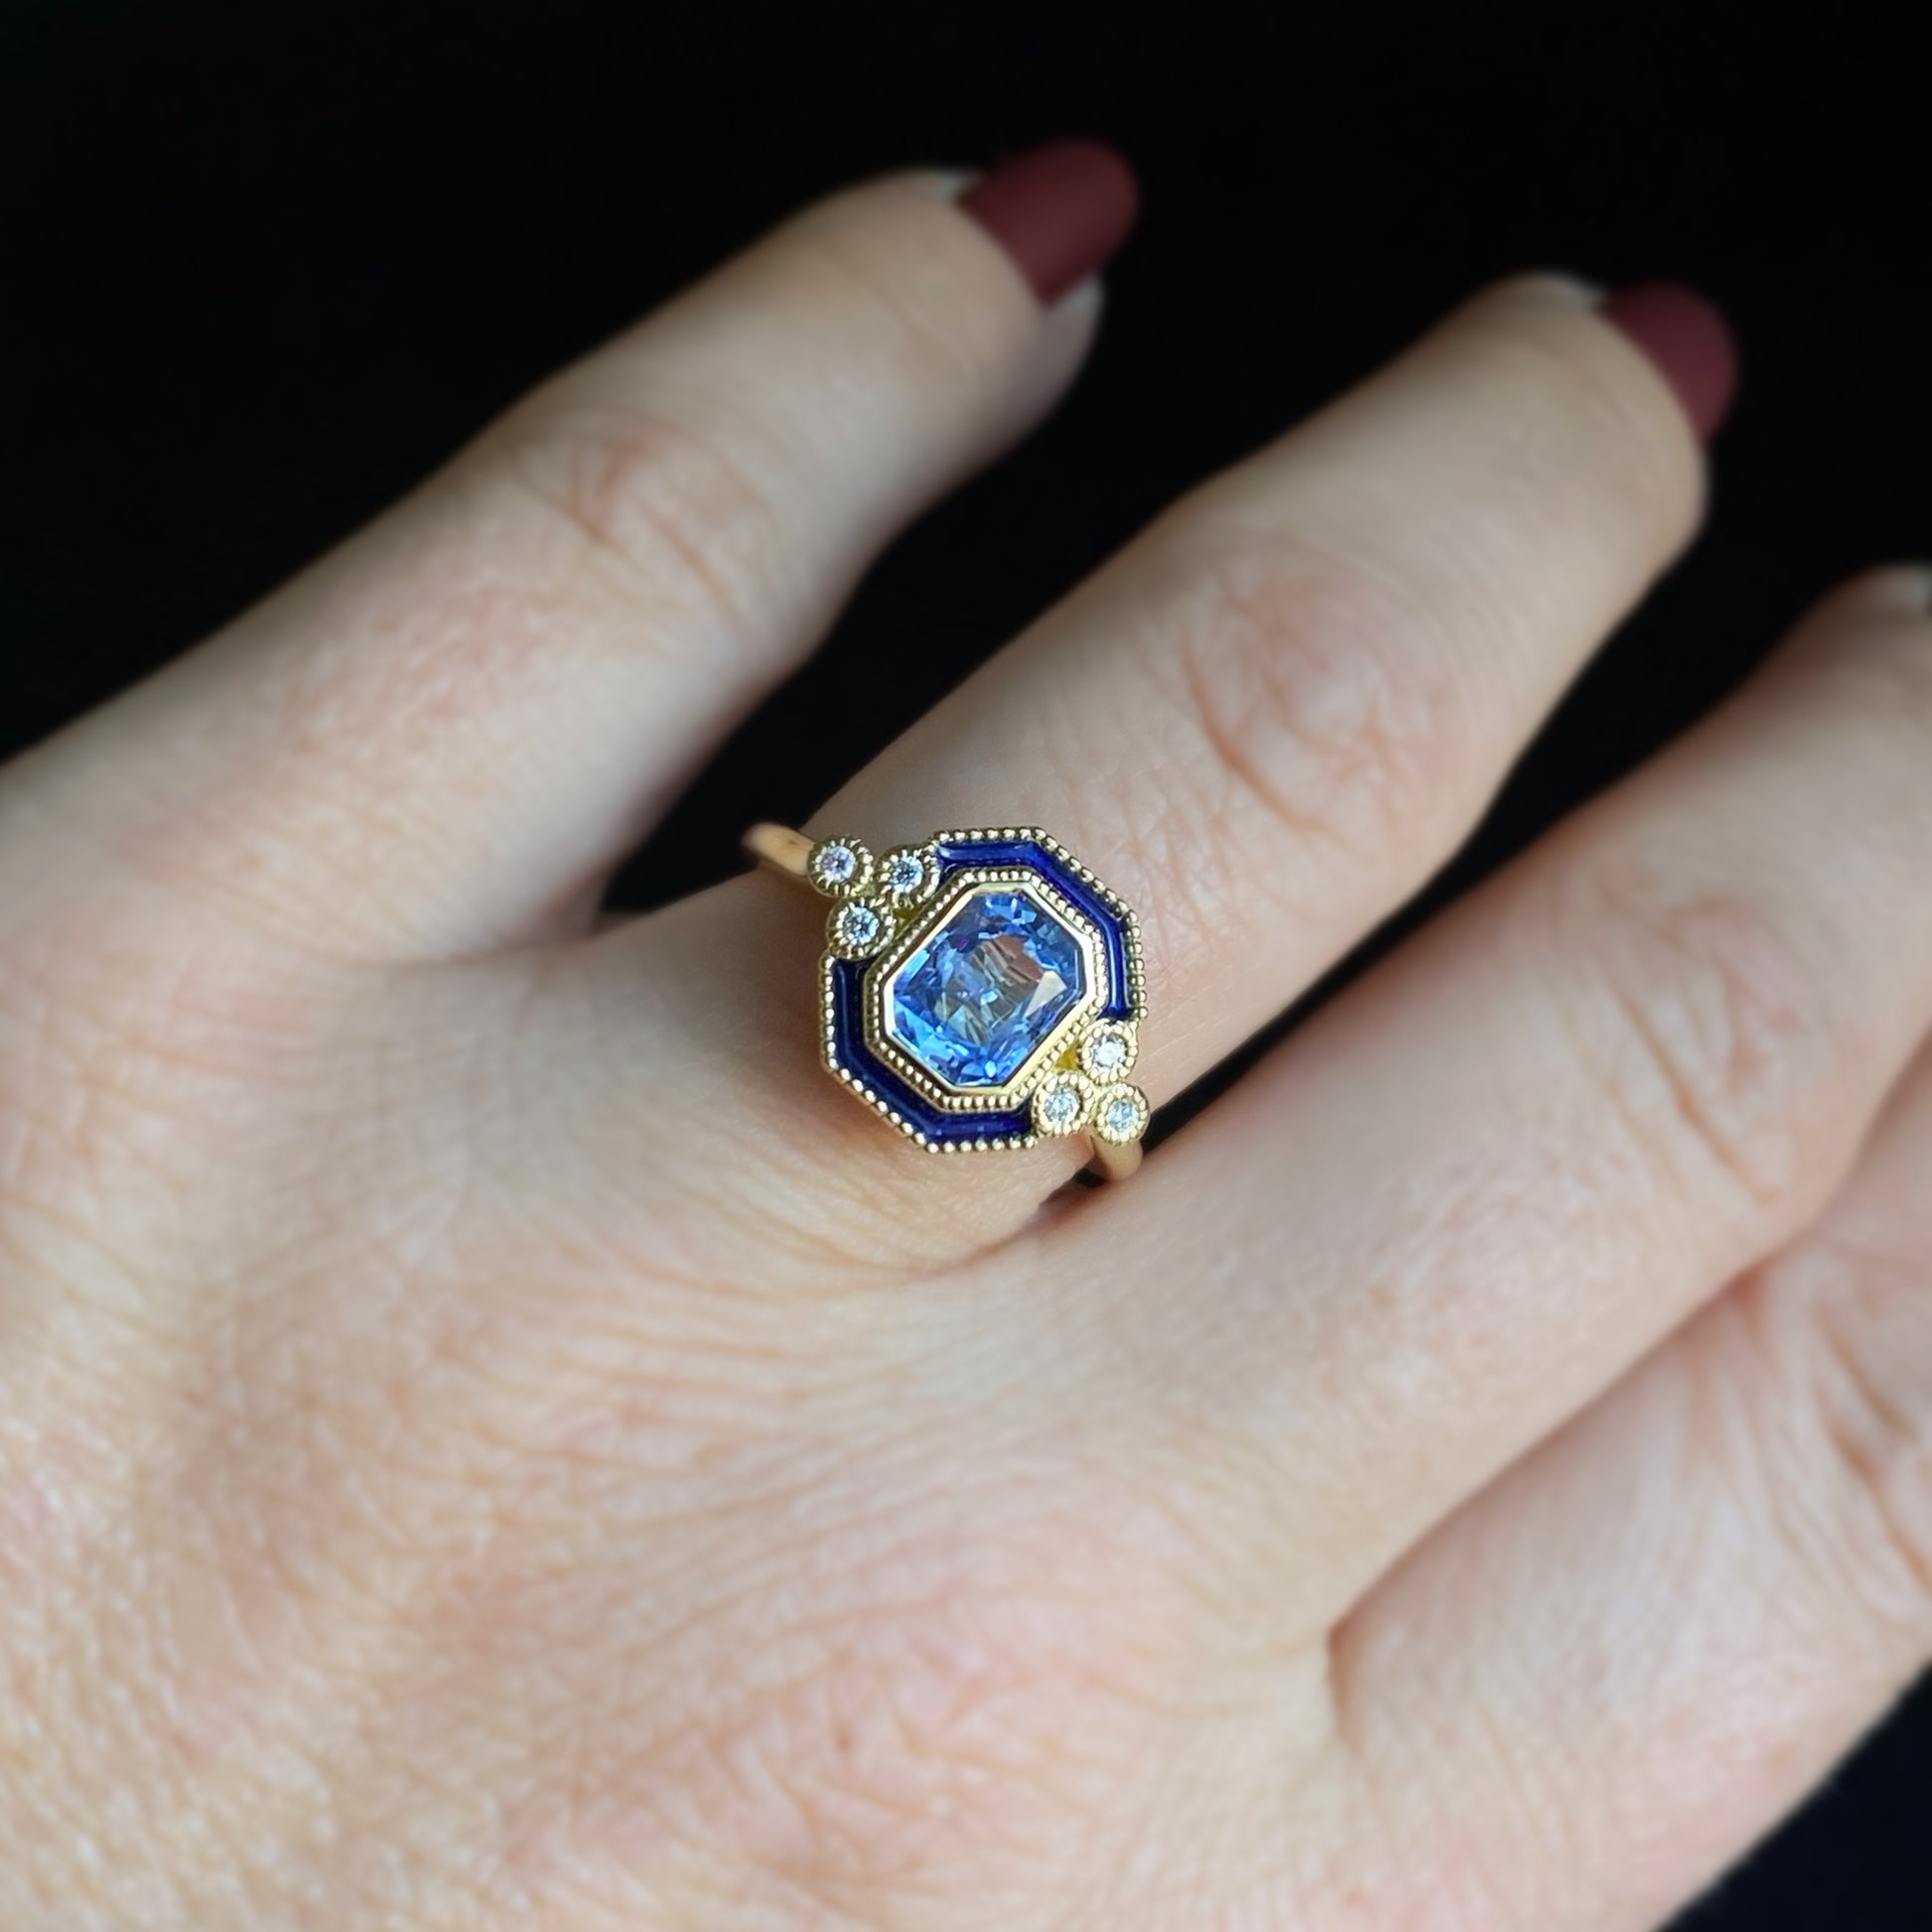 Mazarine Light Blue Sapphire 18K Yellow Gold Ring Blue Enamel Diamonds Cathedral Setting On The Hand Size 7